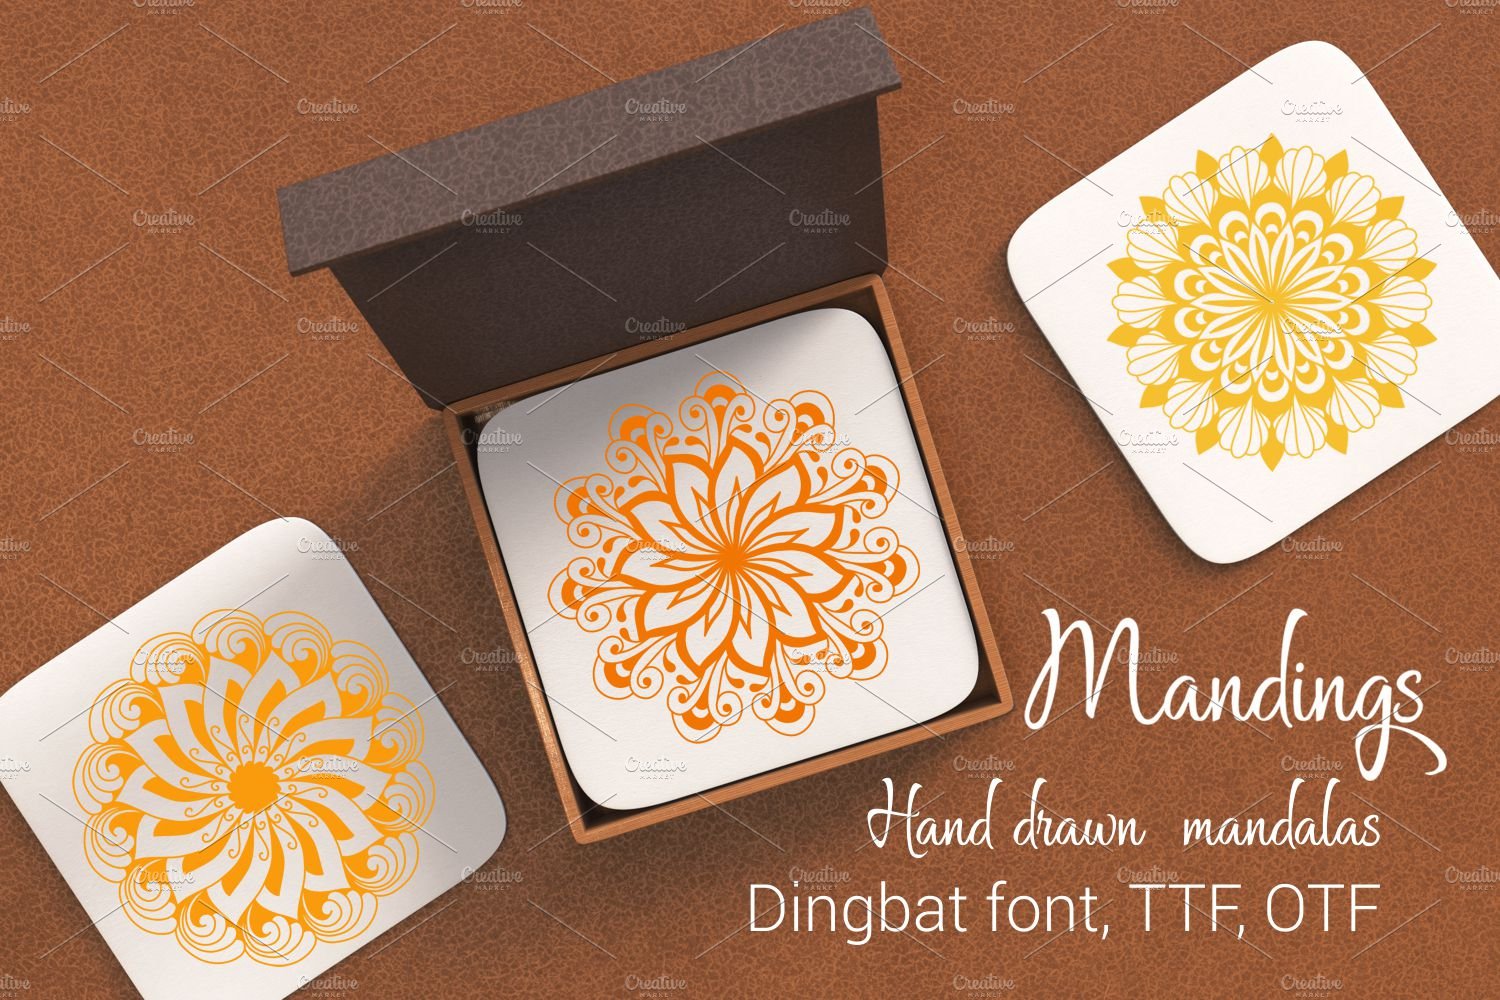 Mandings Dingbat Font cover image.